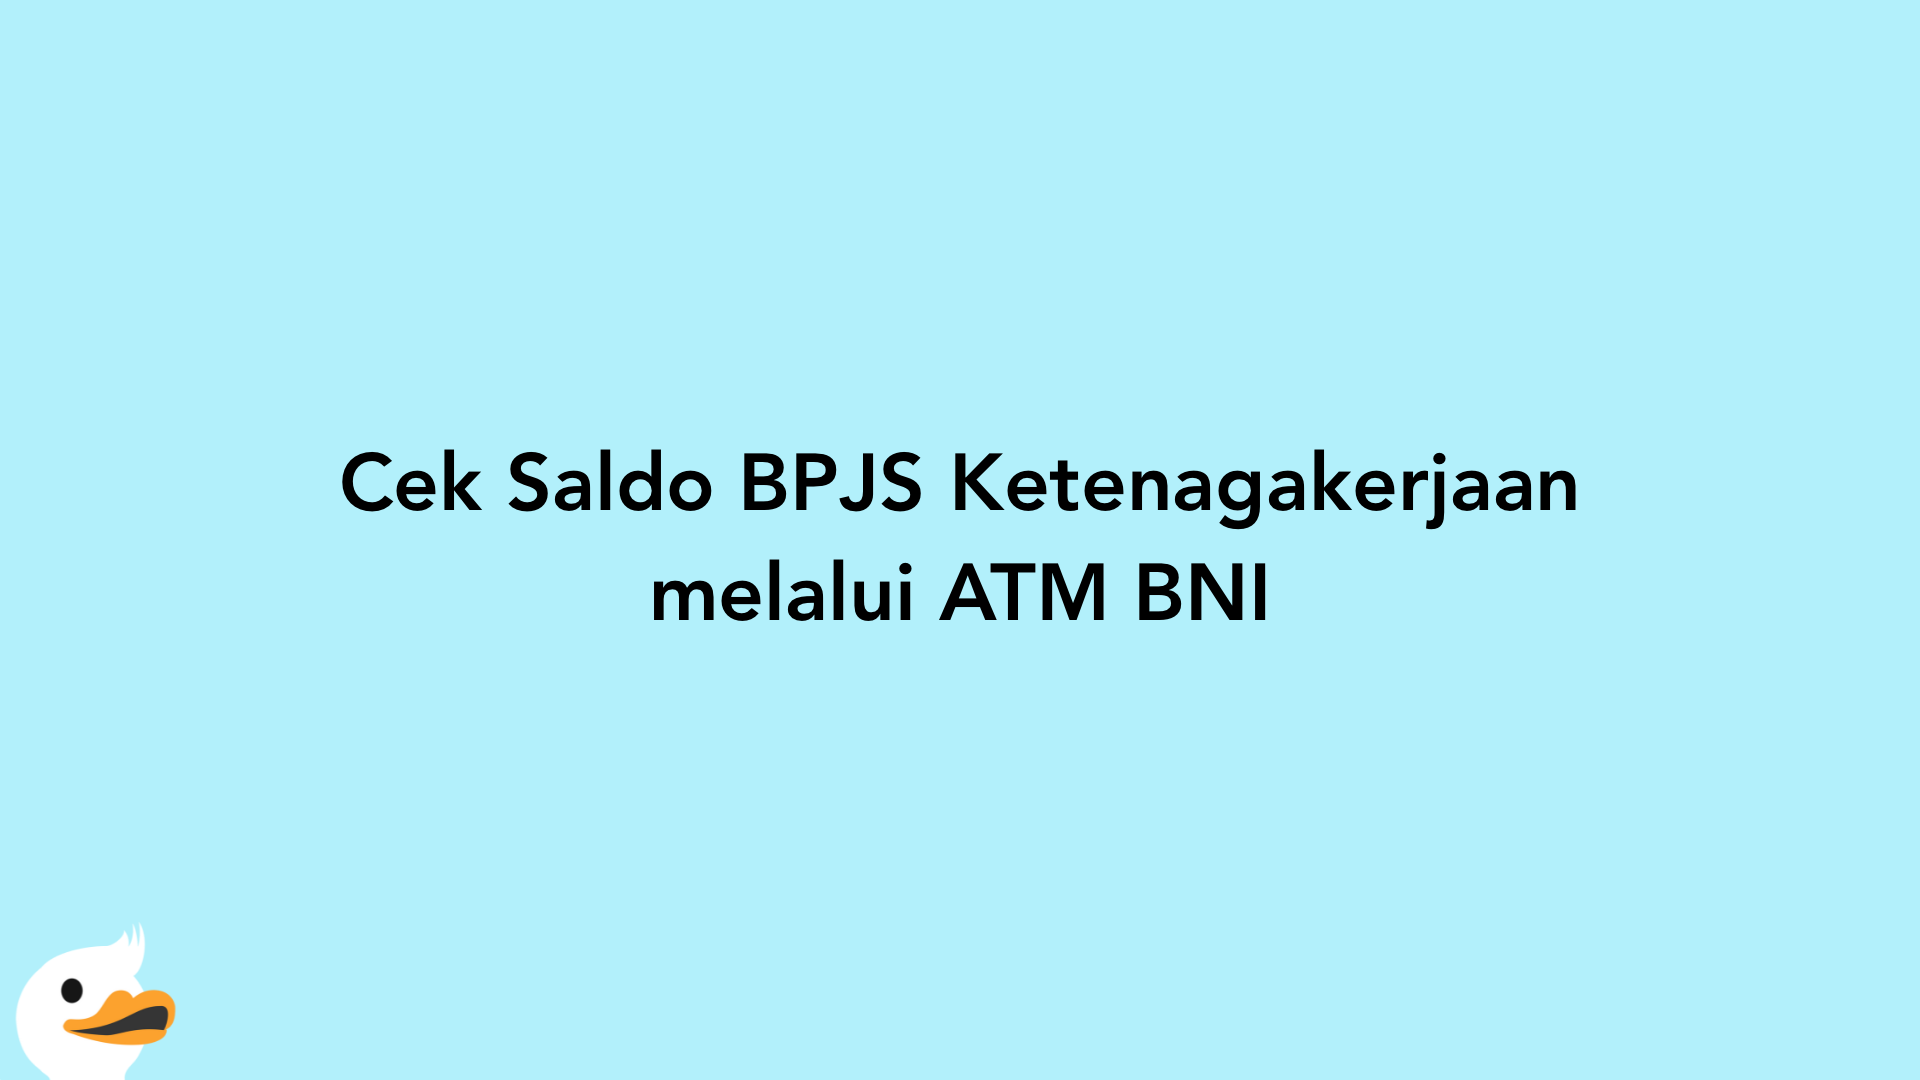 Cek Saldo BPJS Ketenagakerjaan melalui ATM BNI